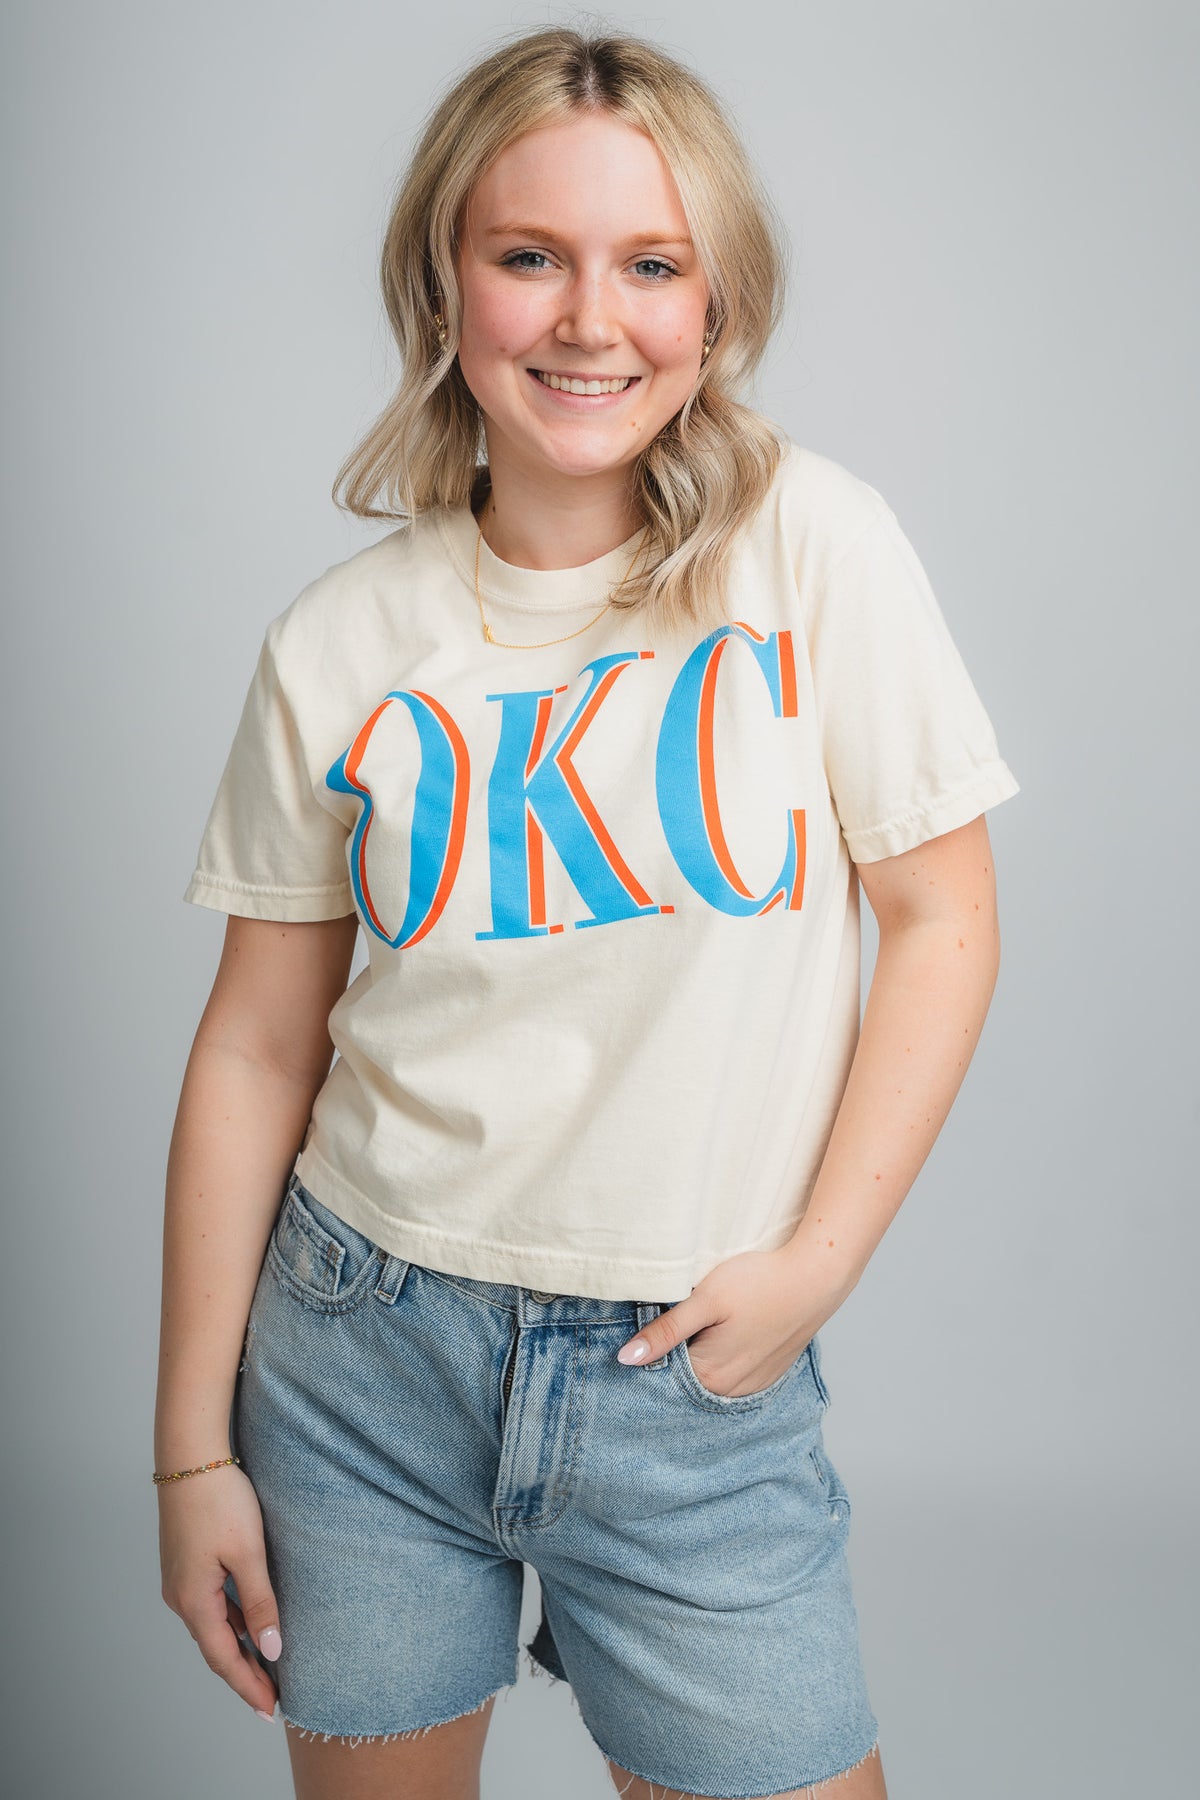 OKC vogue crop t-shirt - Trendy OKC Apparel at Lush Fashion Lounge Boutique in Oklahoma City